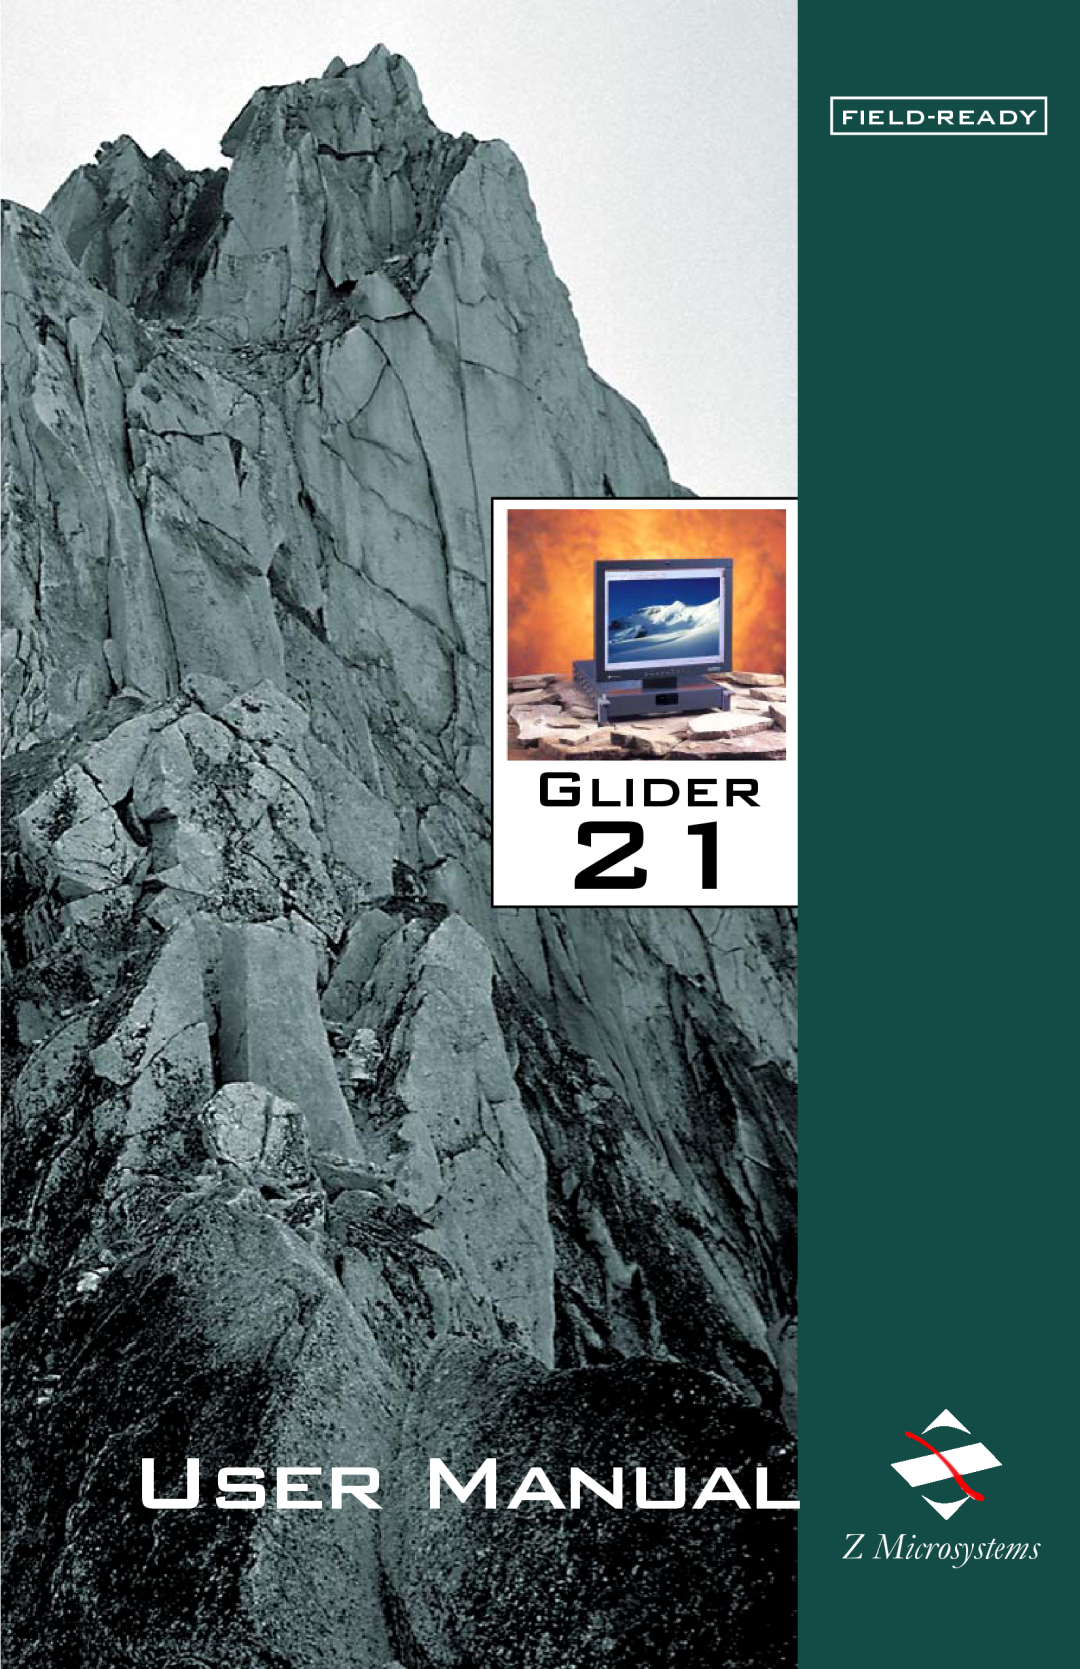 Z Microsystems 21 manual User Manual, Glider, Z Microsystems, Field-Ready 